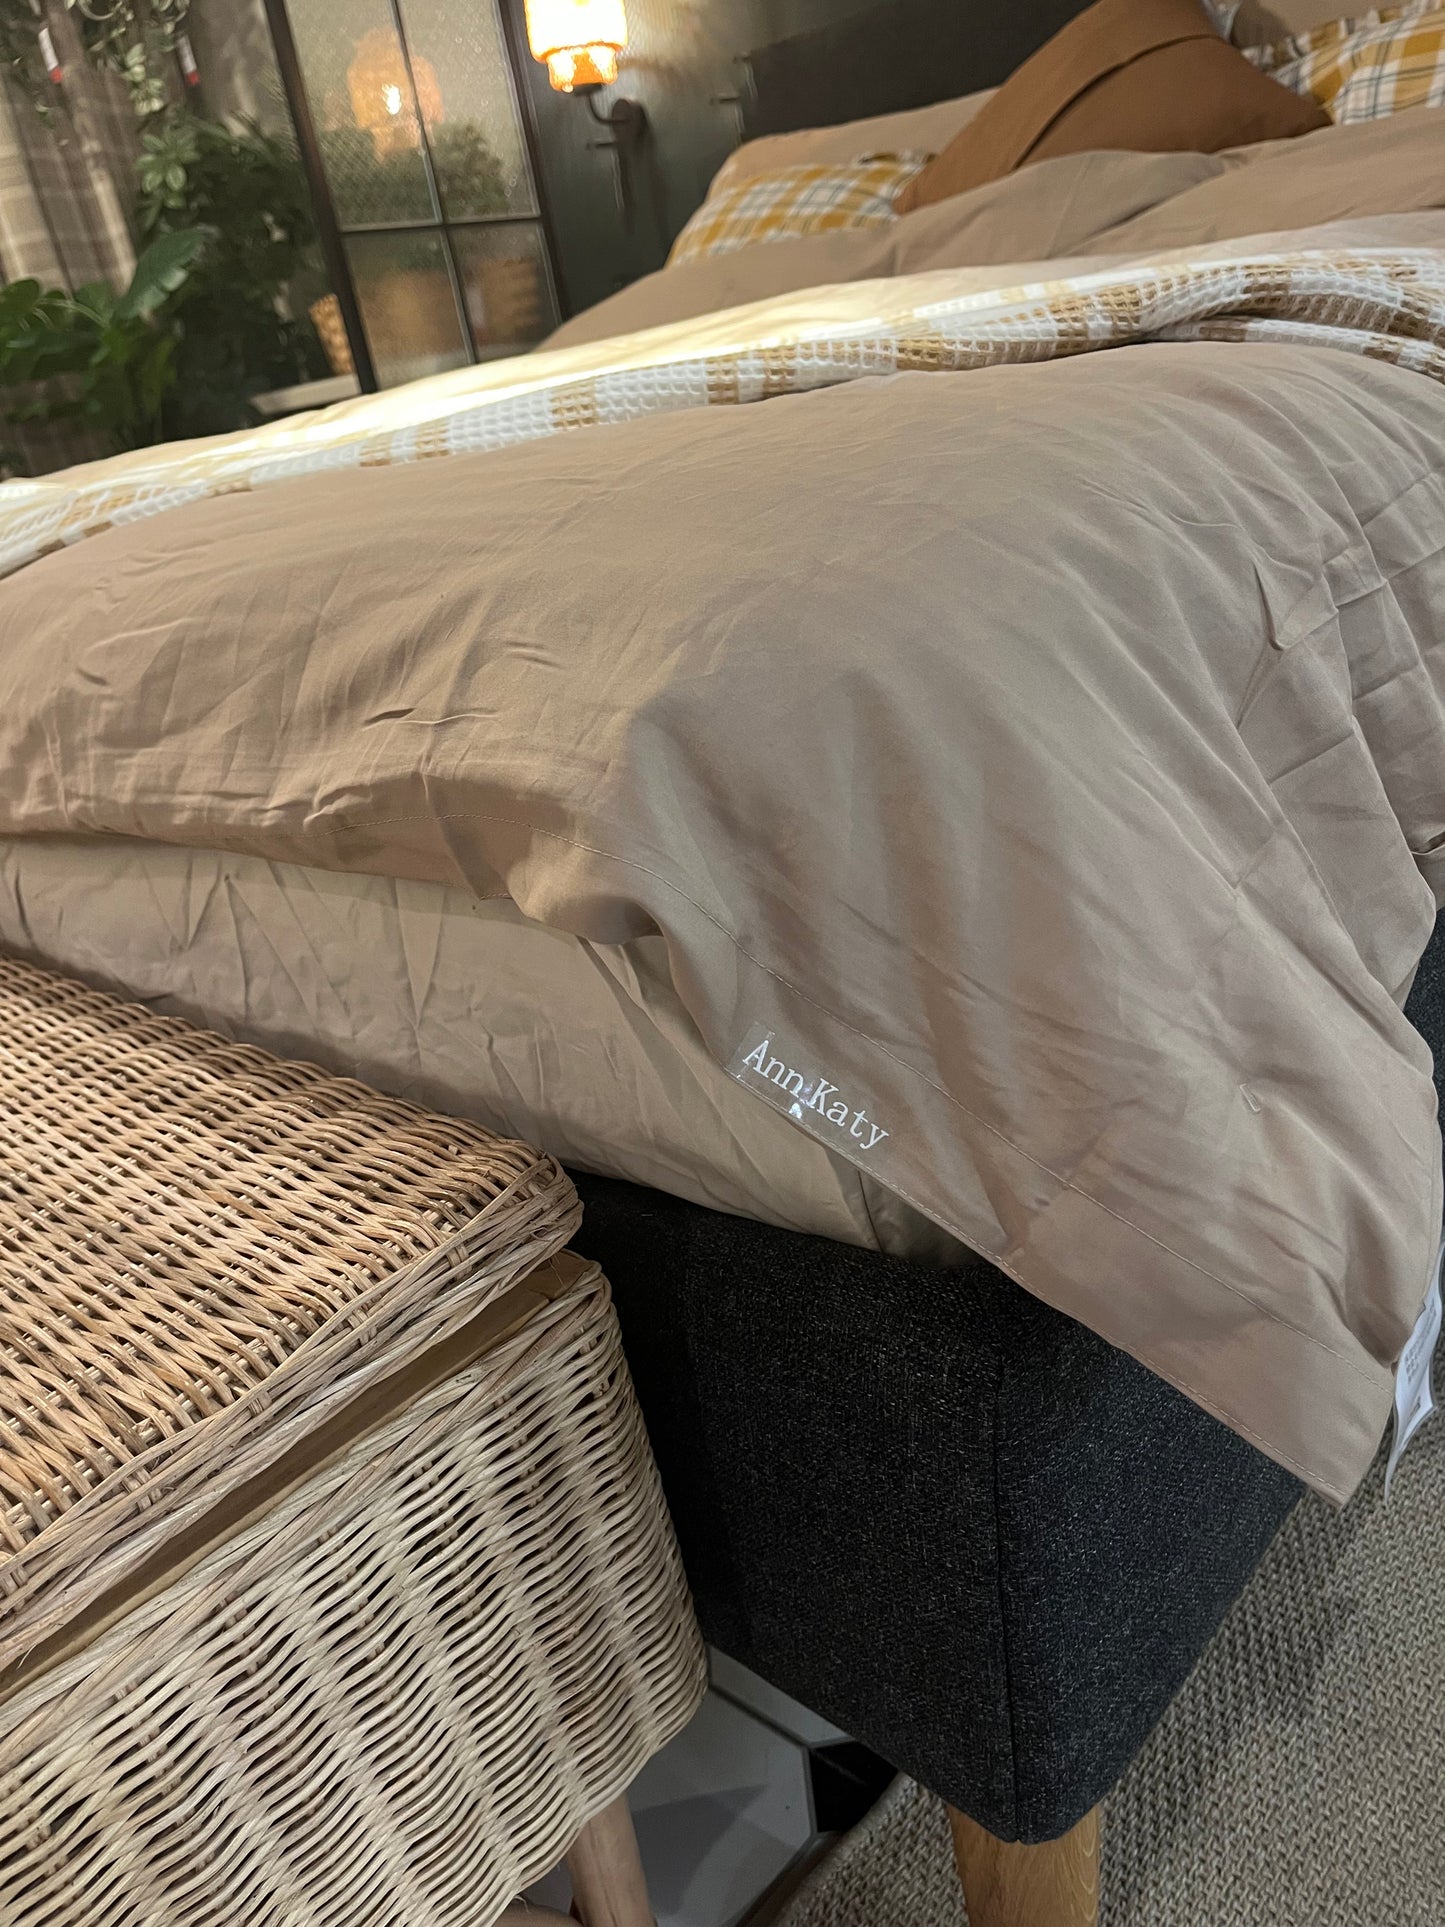 Ann katy Beige Queen Comforter Set - 4 Pieces Pinch Pleat Bed Set, Down Alternative Bedding Sets for All Season, 1 Comforter, 2 Pillowcases, 1 Decorative Pillow